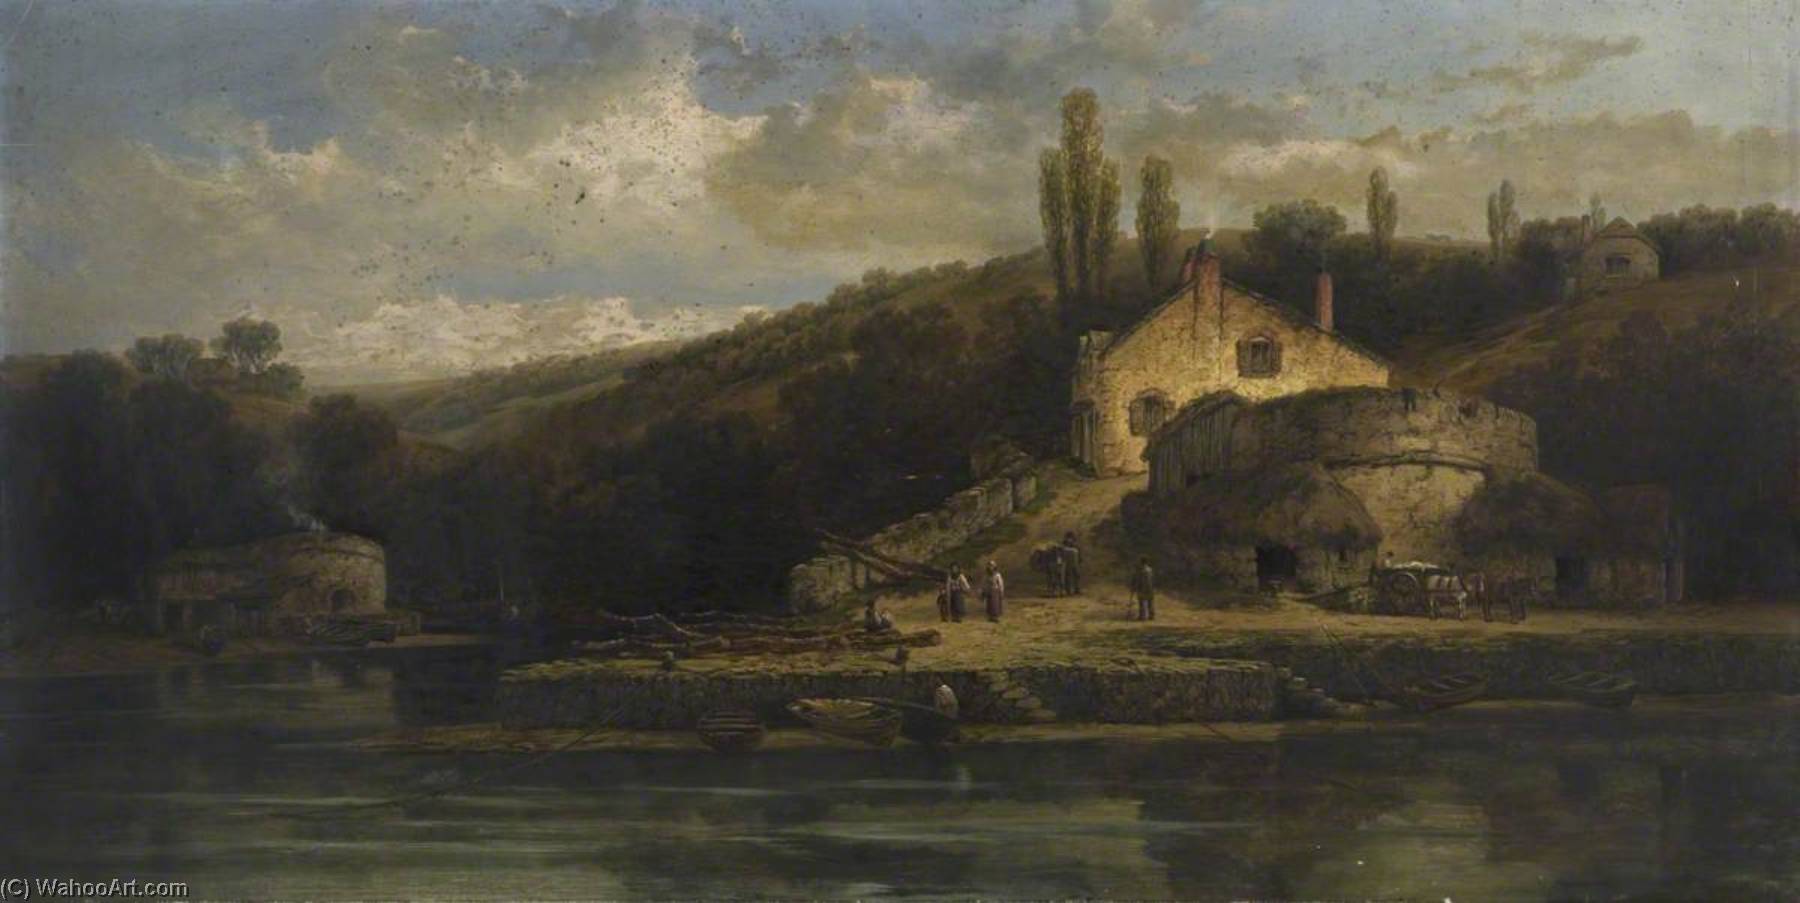 On the Salcombe River, Devon, 1872 by William Pitt William Pitt | ArtsDot.com